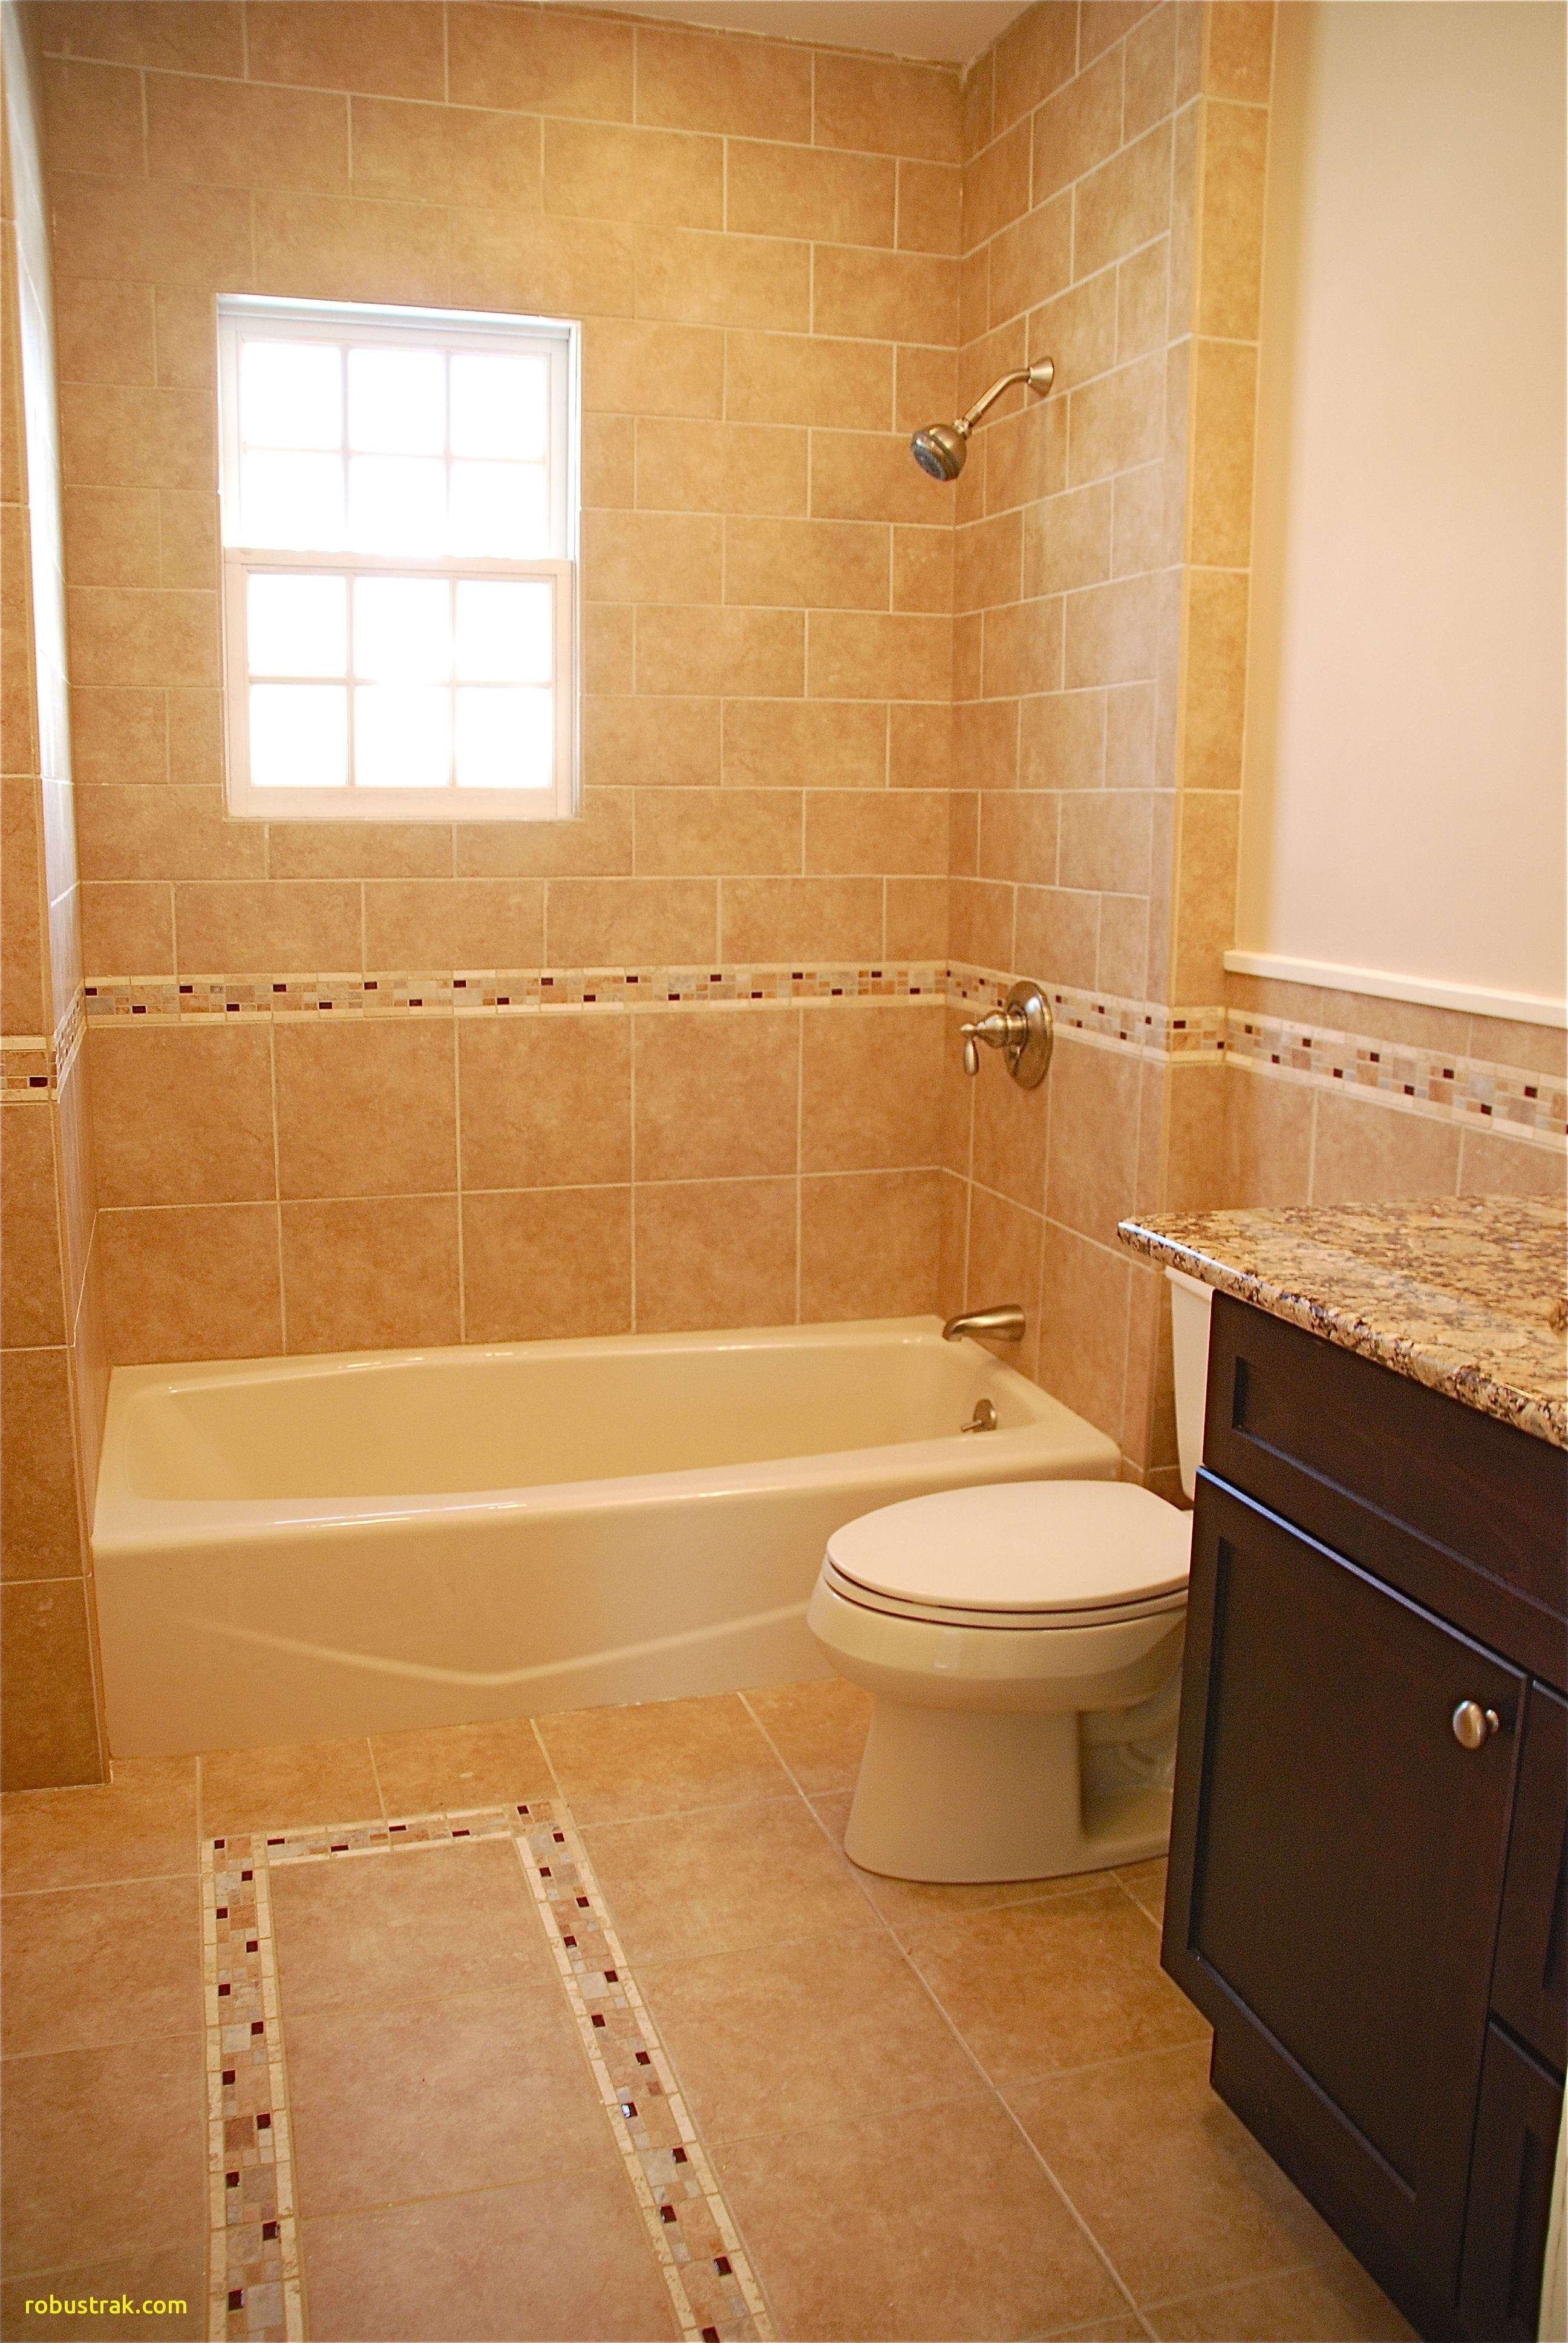 10 Most Popular Home Depot Bathroom Tile Ideas elegant home depot bathroom tile ideas home design ideas 2022